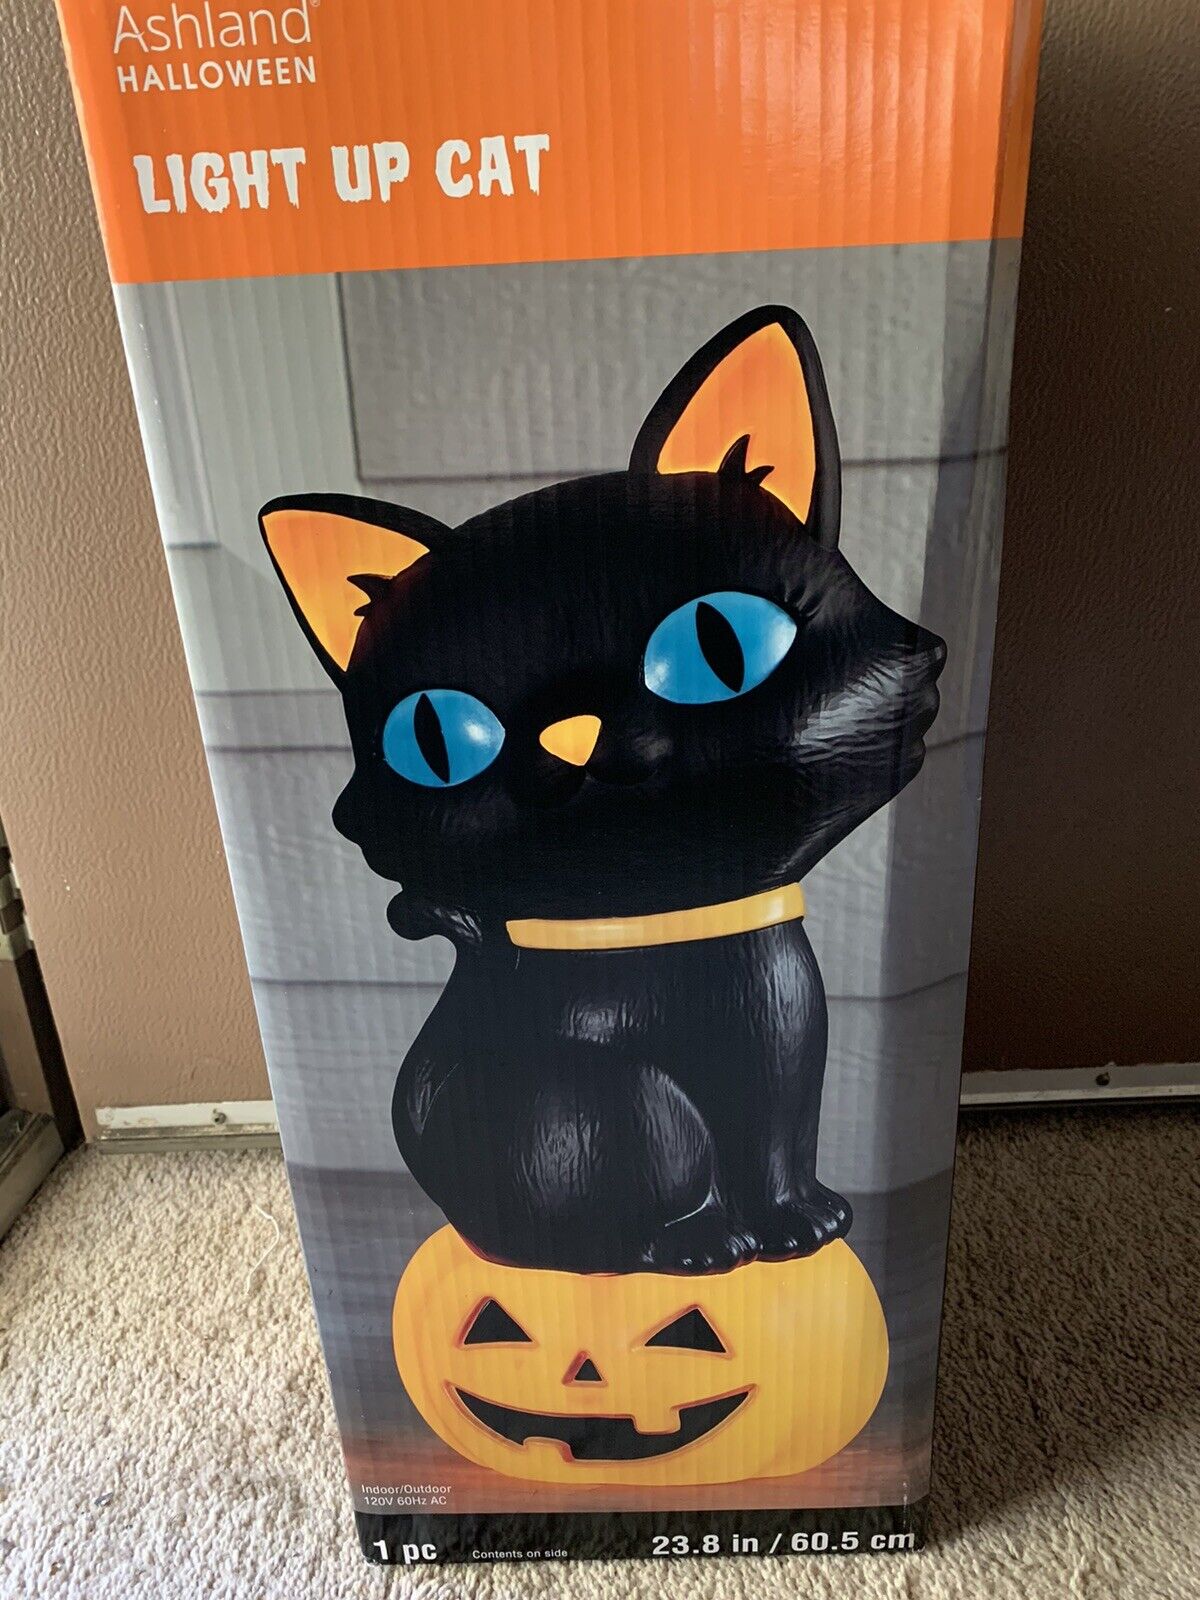 Ashland Black Cat Jack O Lantern Pumpkin Halloween Light Up Blow Mold 23.8” Tall